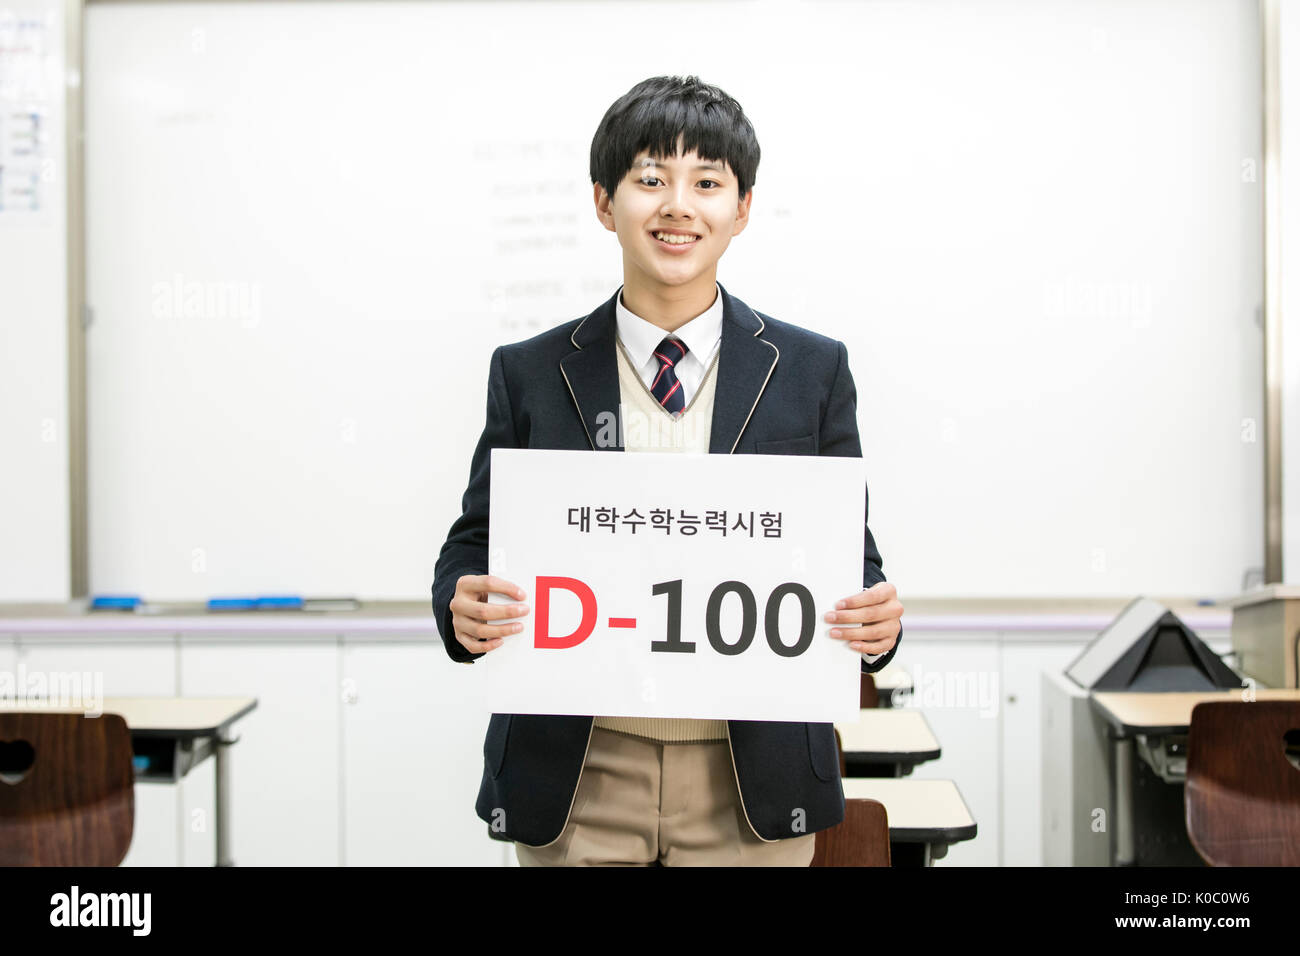 Smiling Korean school boy showing a placard Stock Photo